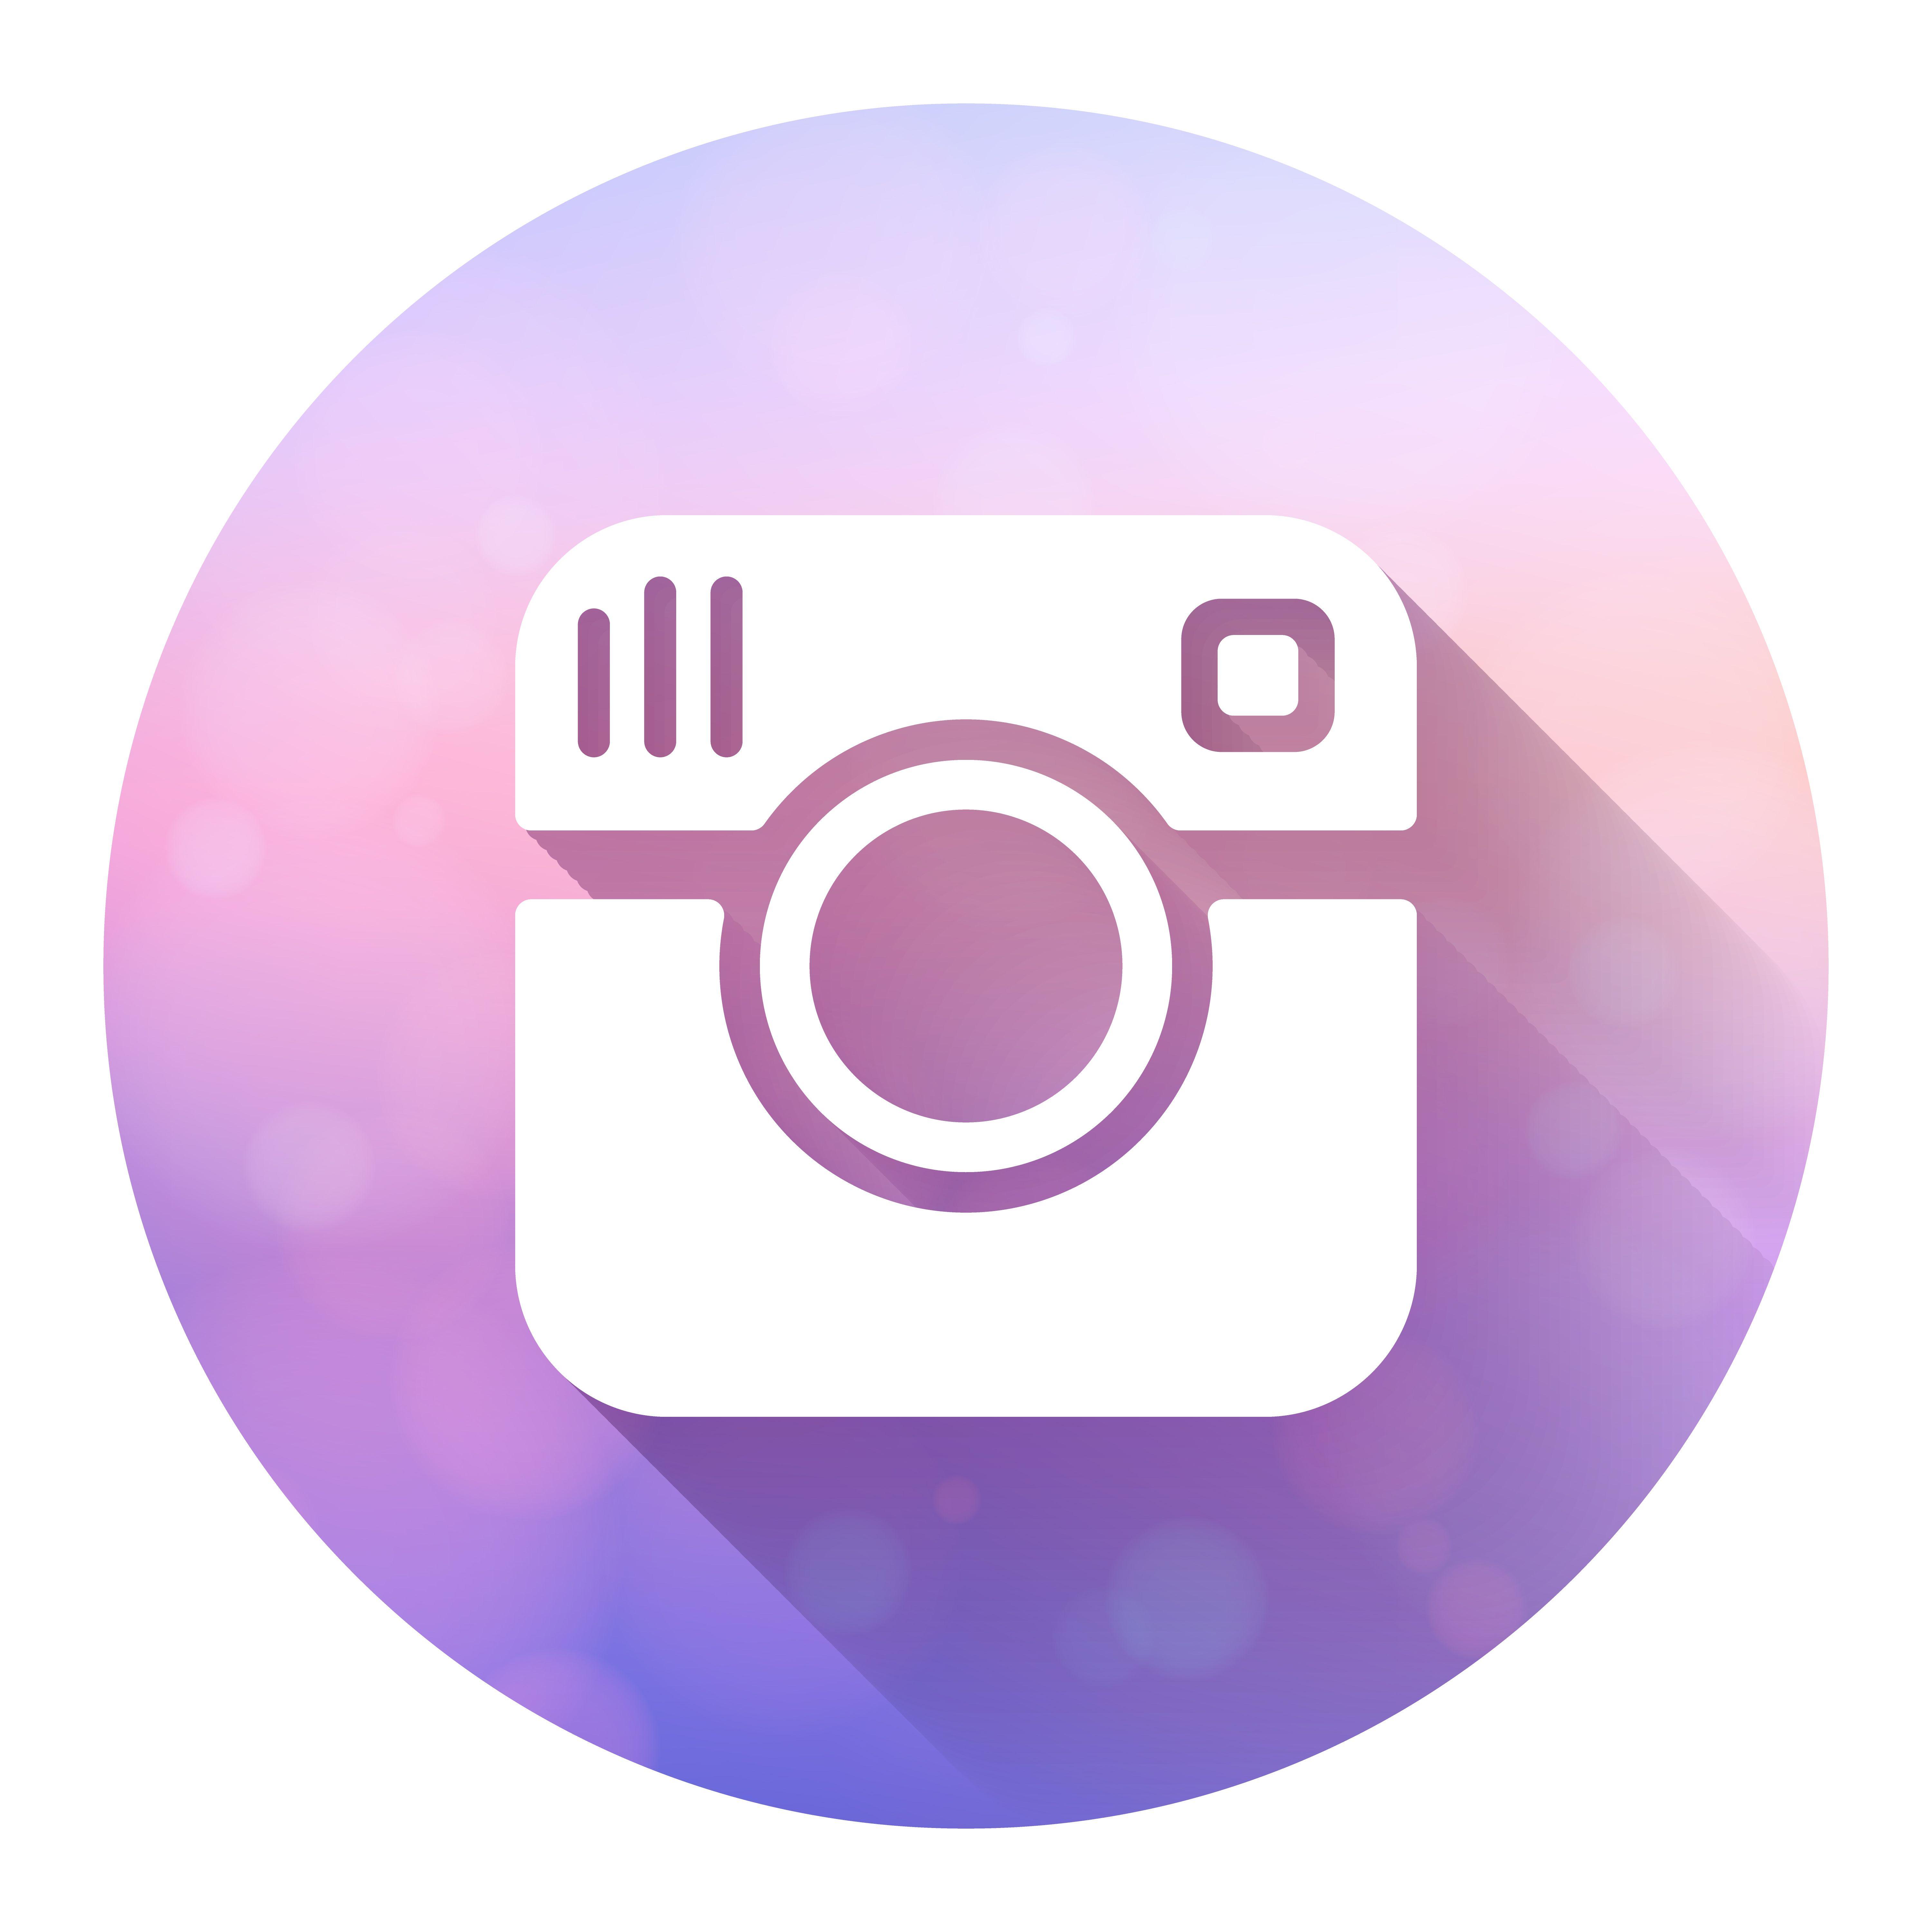 Love Instagram Logo - Instagram Marketing Tips To Make People Love Your Brand